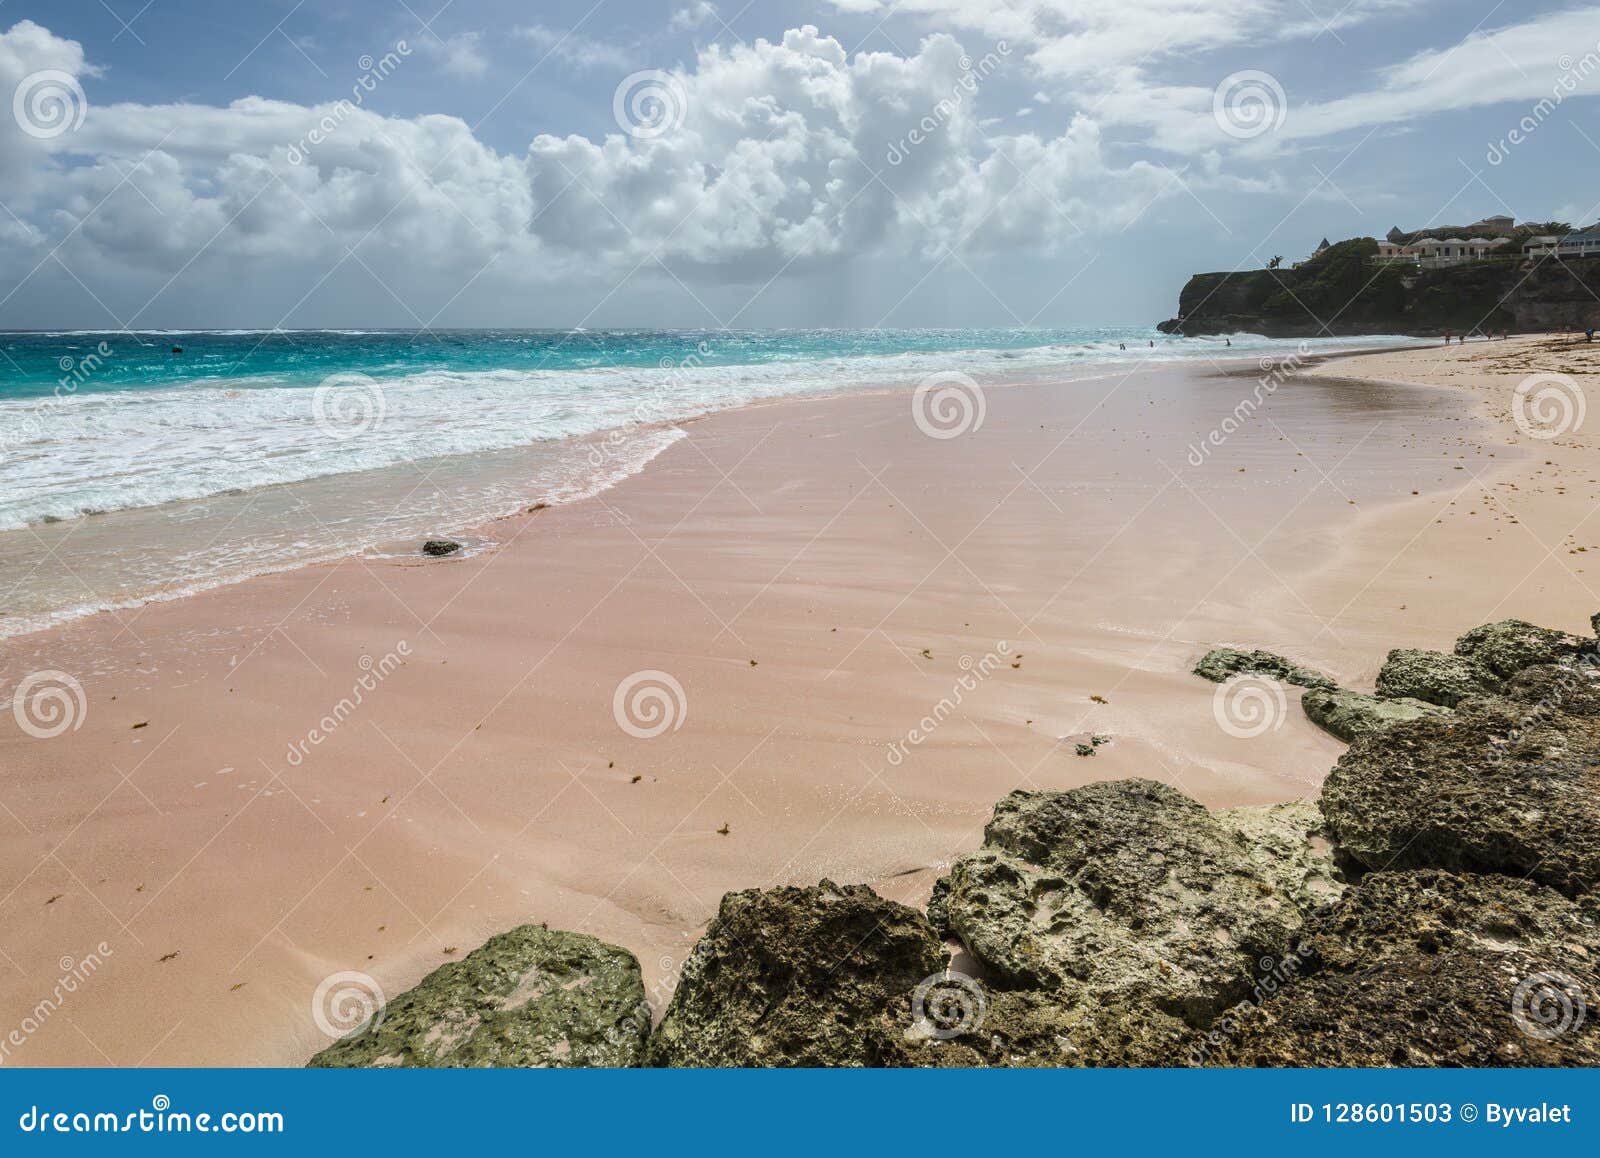 Crane Beach In Barbados Caribbean Stock Image Image Of Sand